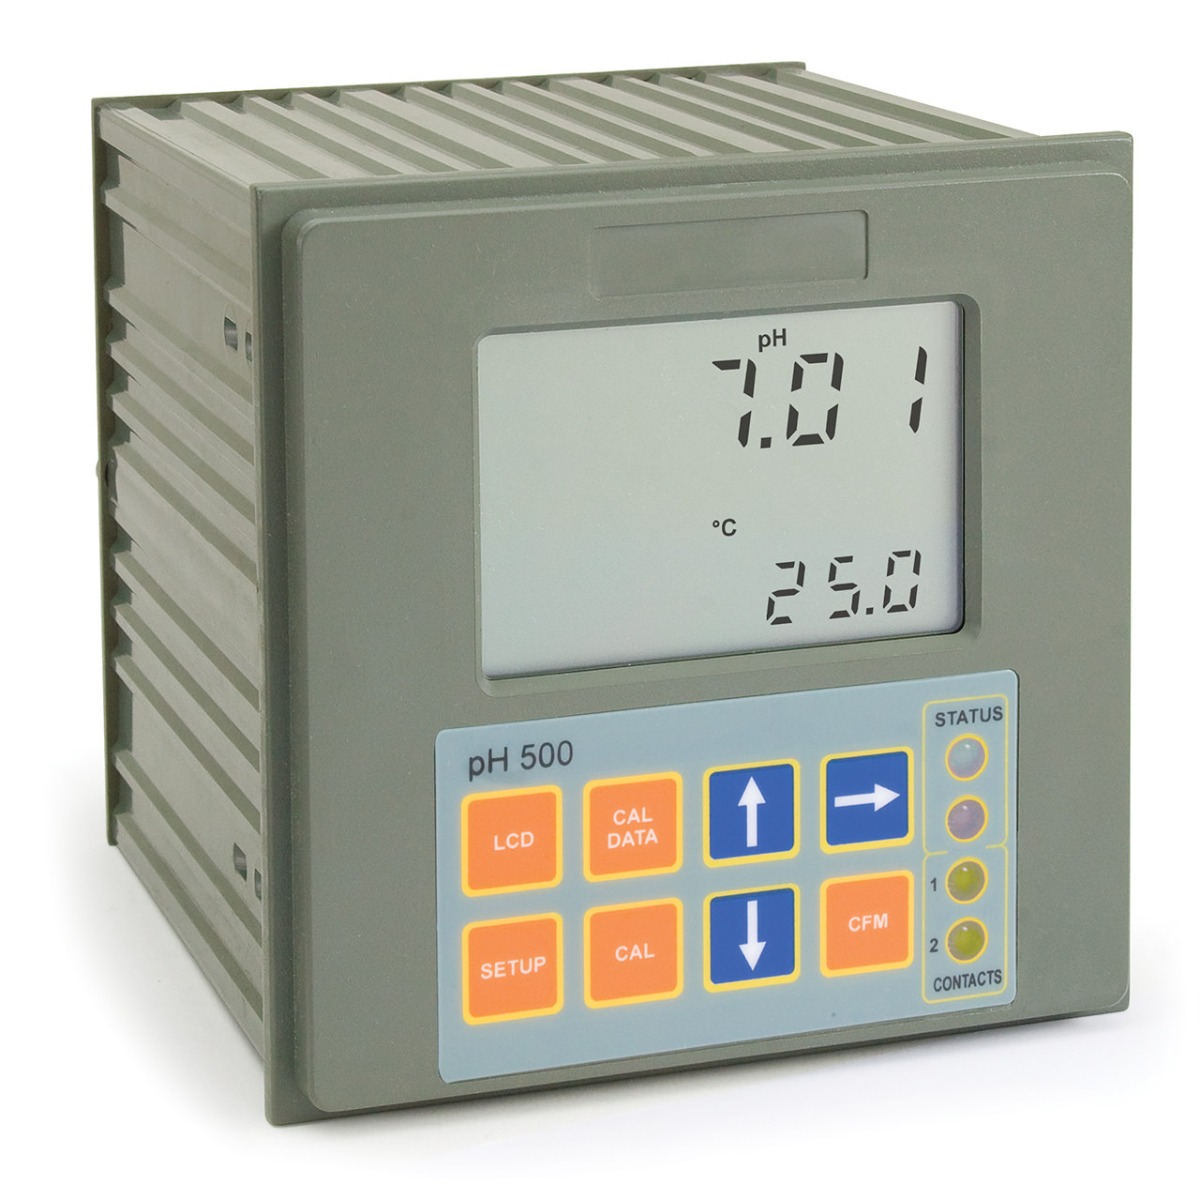 Panel-mounted pH Digital Controller with Matching Pin - pH500 series